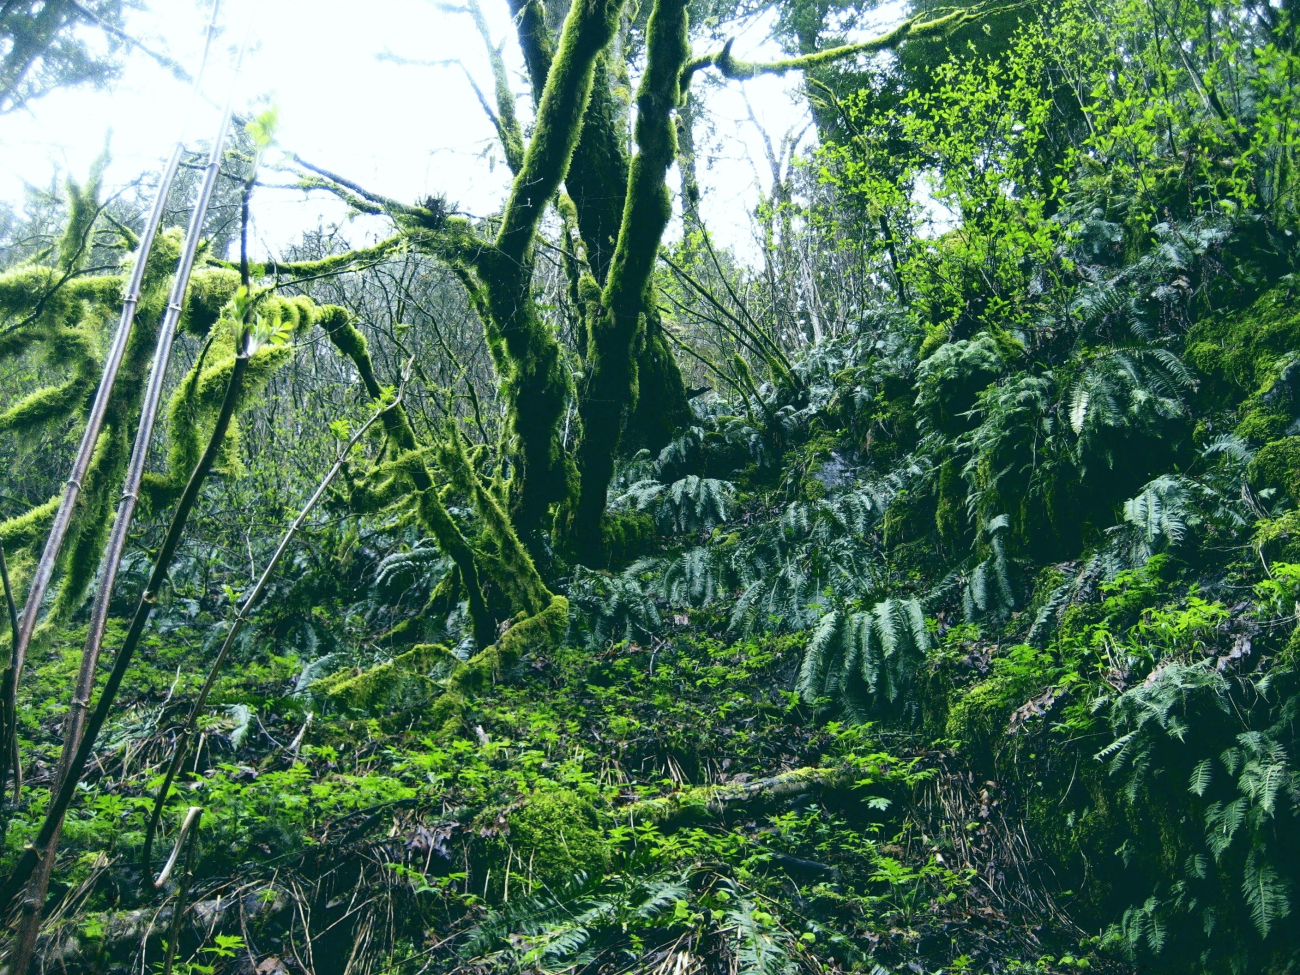 Mossy trees and ferns near Multnomah Falls